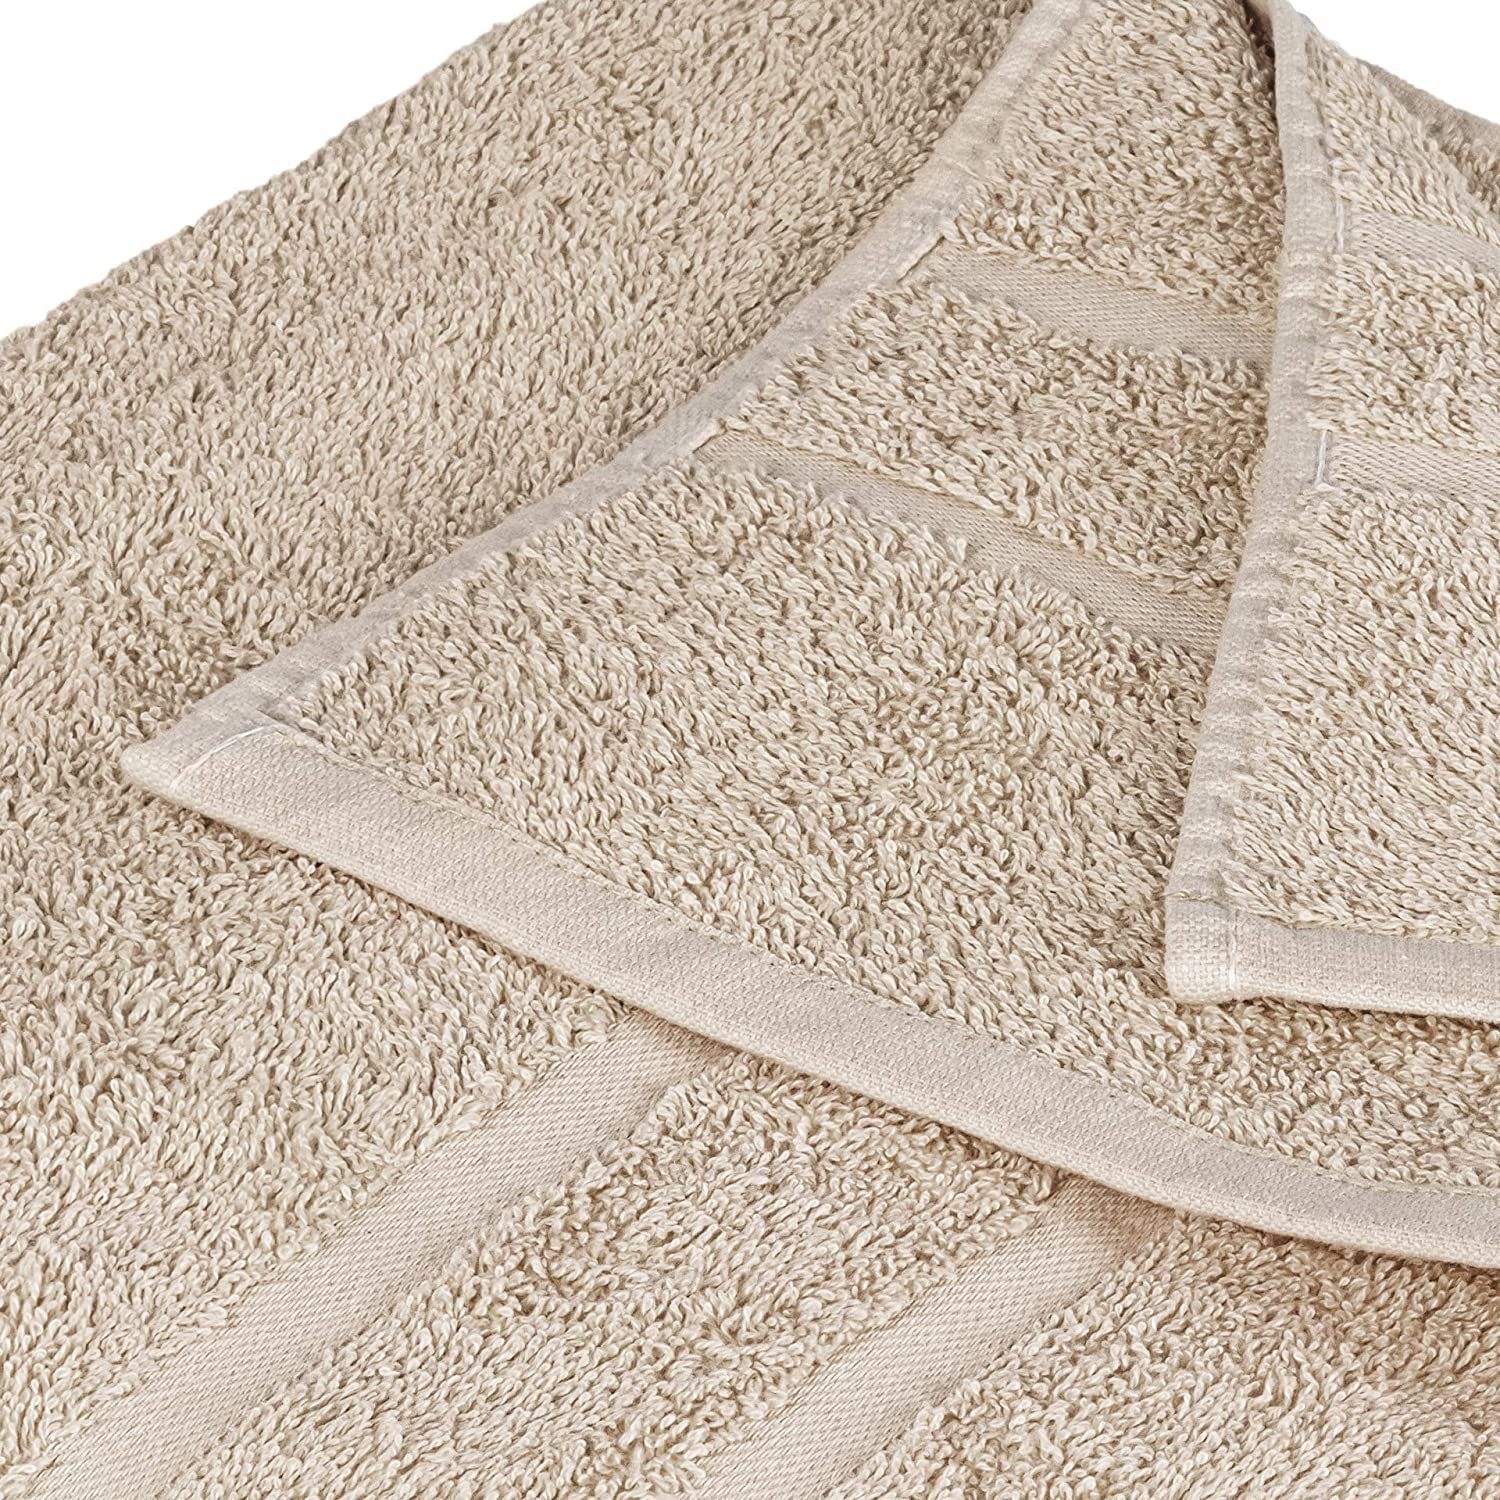 StickandShine Handtuch Wahl Saunatücher Duschtücher in Badetücher Baumwolle Gästehandtücher 500 Sand GSM zur 100% Handtücher